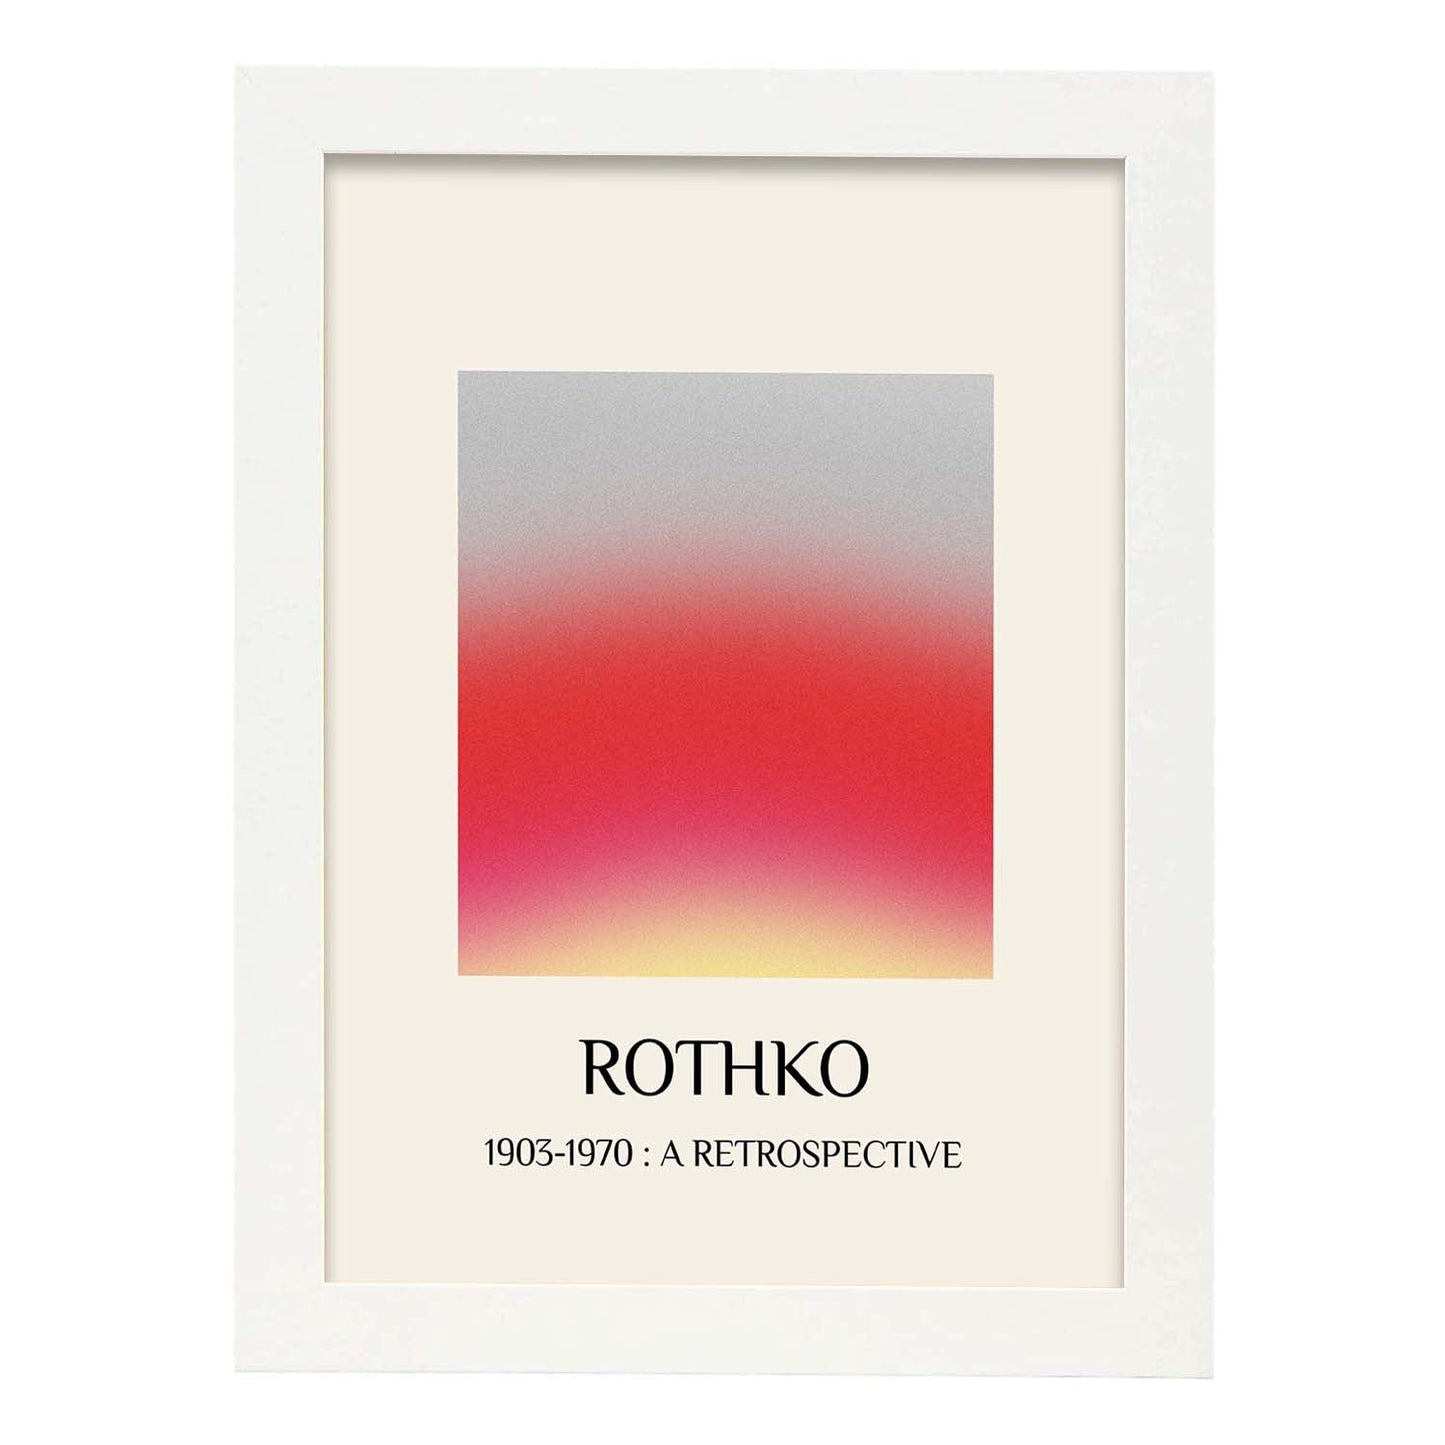 Lamina artistica decorativa con ilustración de Exposición Rothko 5 estilo expresionismo abstracto-Artwork-Nacnic-A4-Marco Blanco-Nacnic Estudio SL